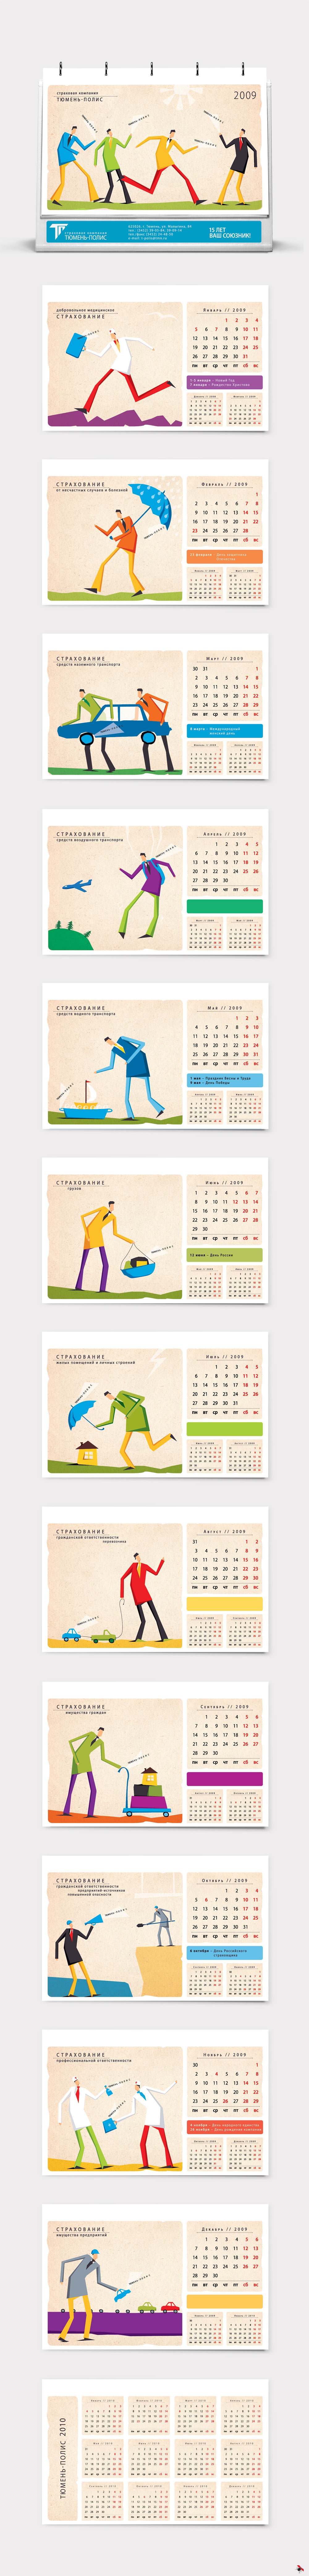 Тюмень-Полис - календарь